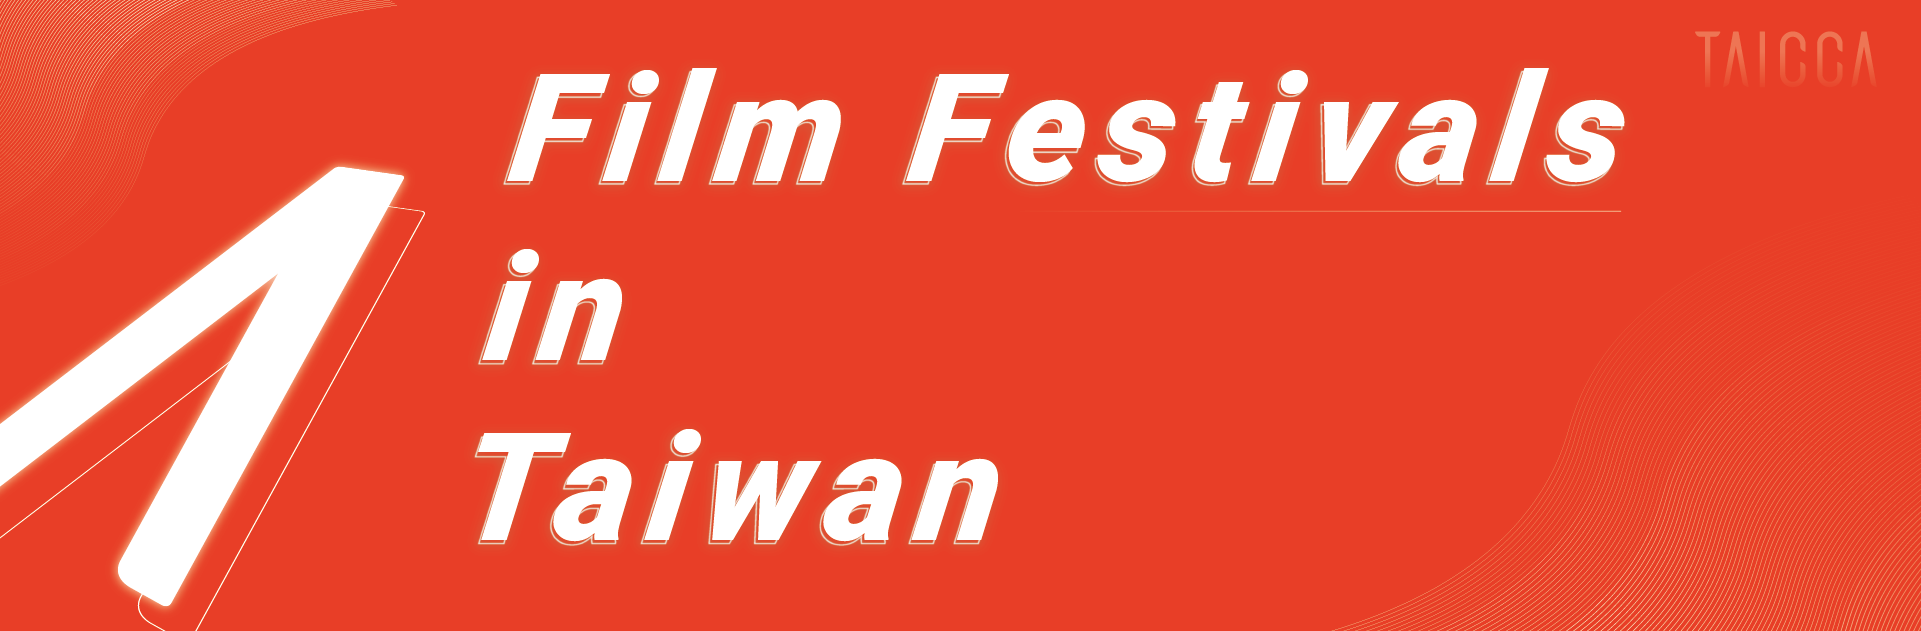 Film Festivals in Taiwan